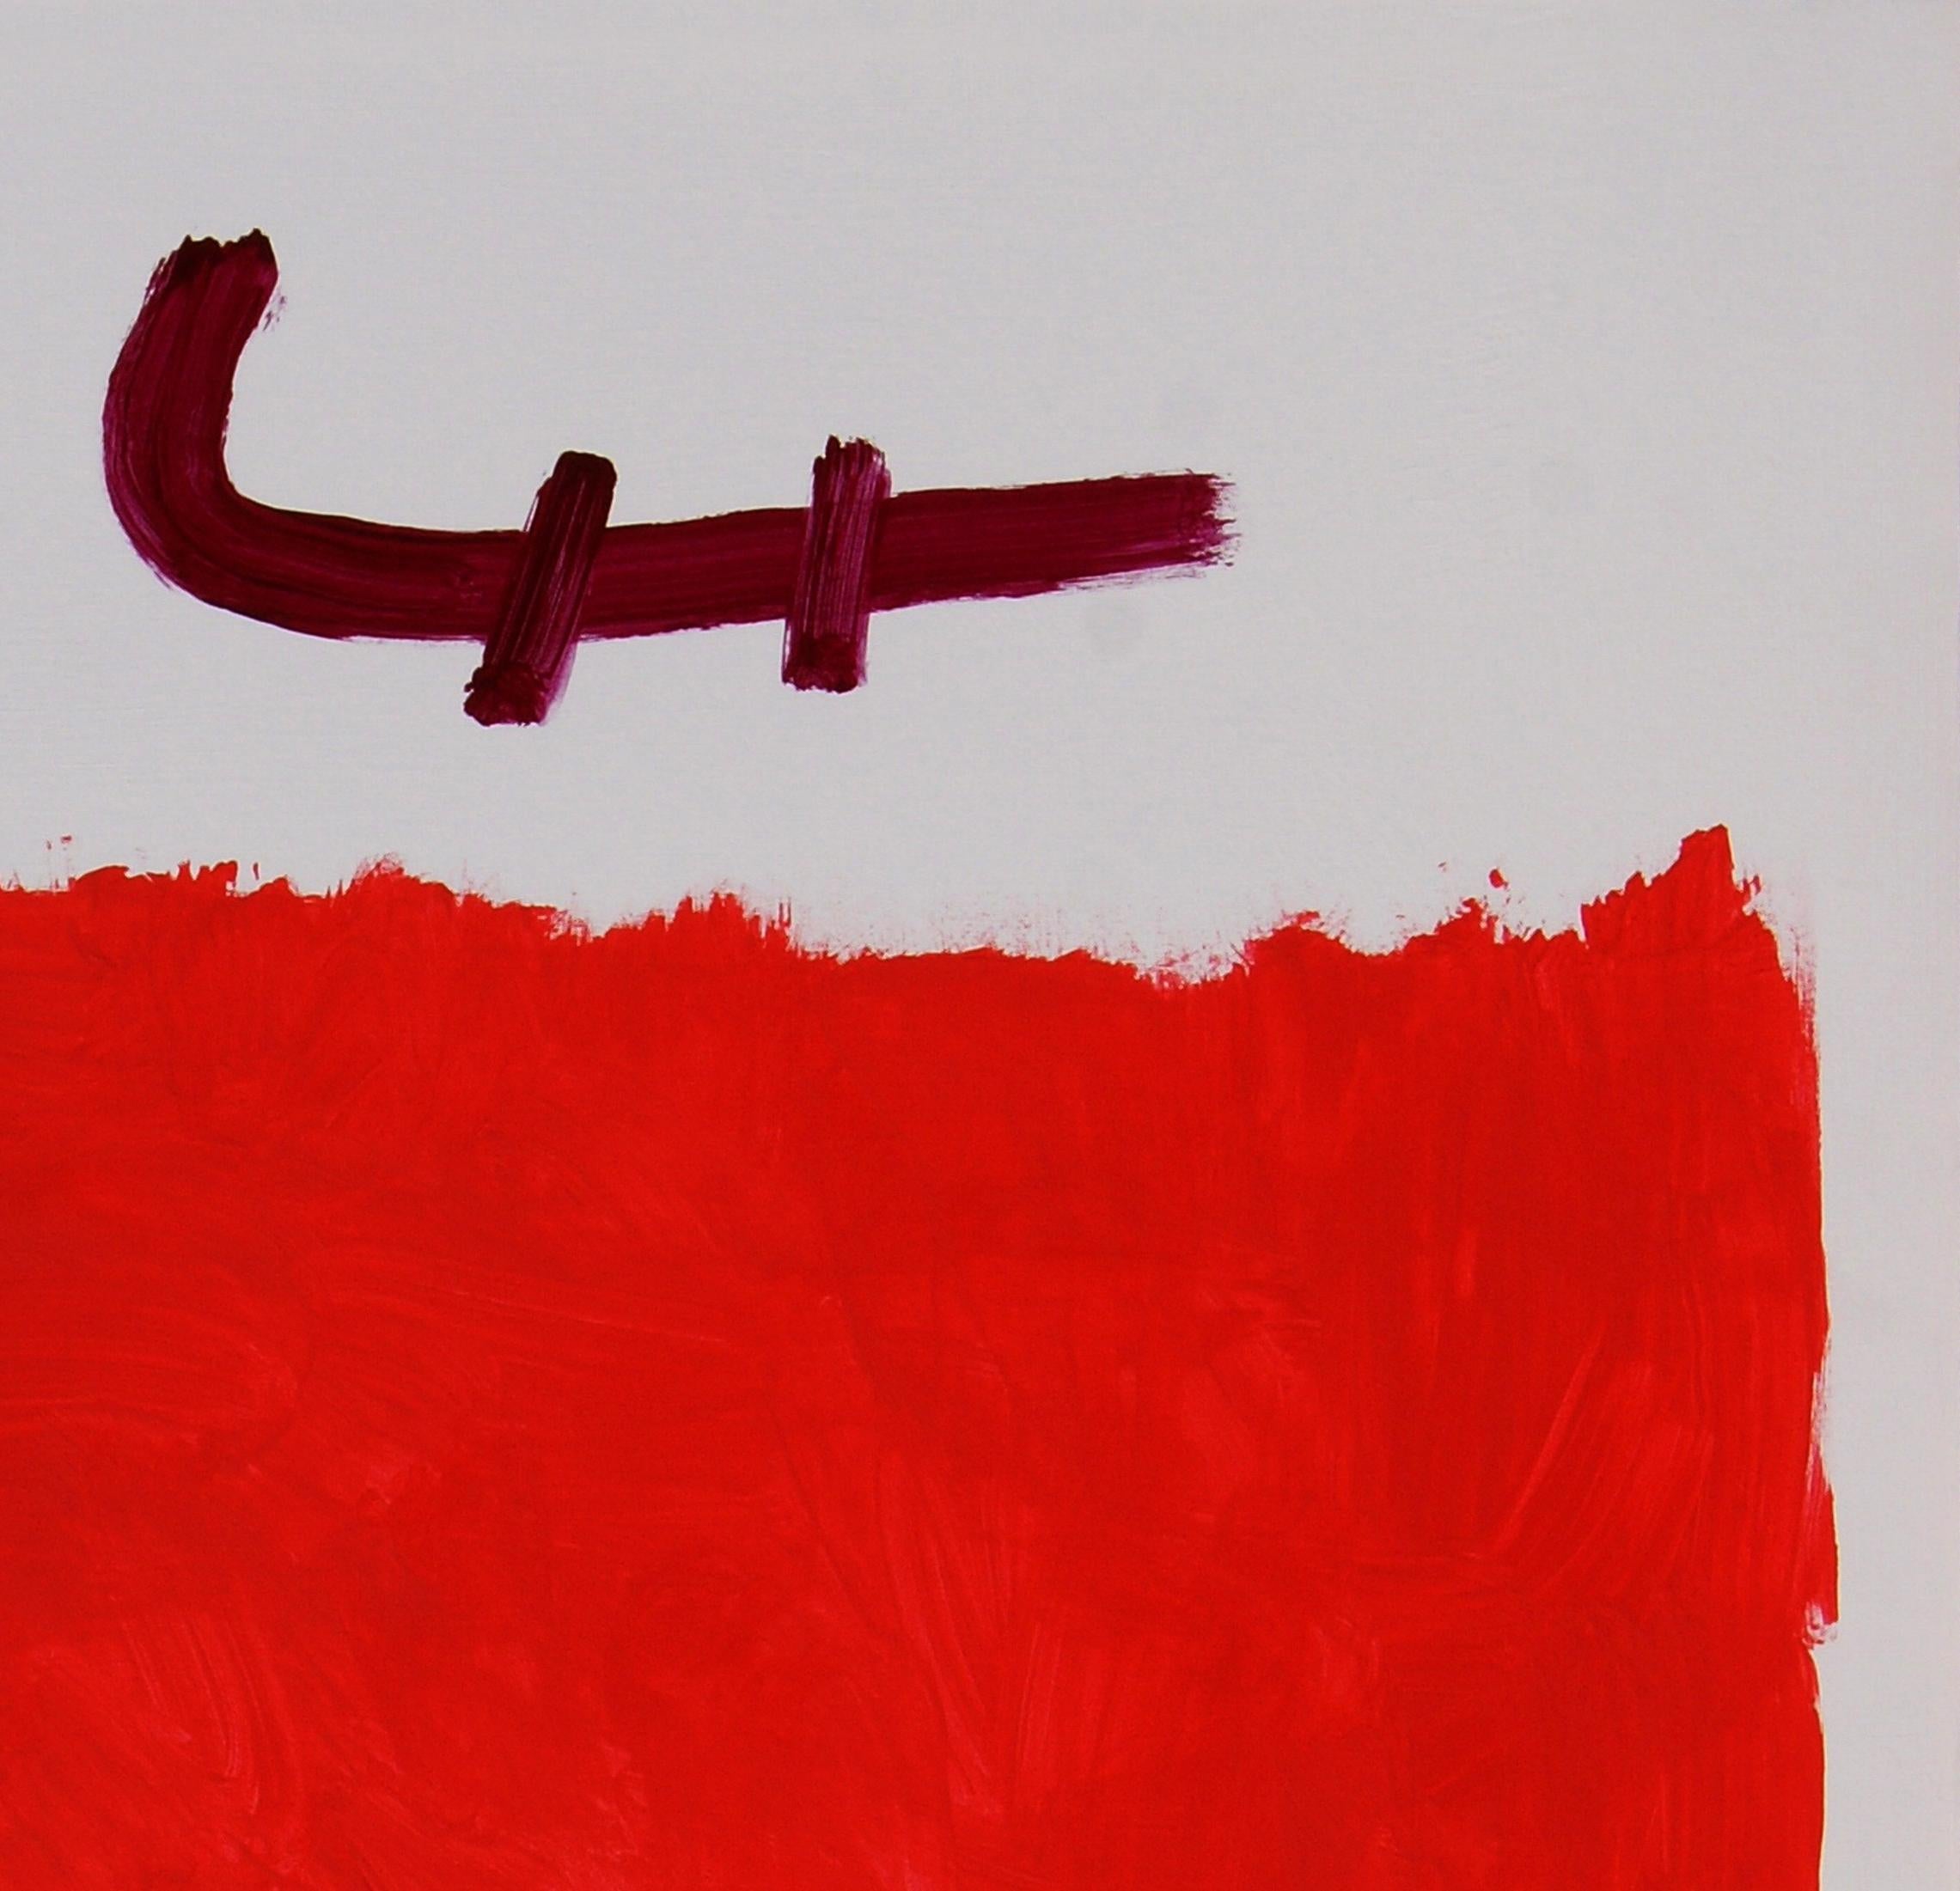 Ruz . Red  Vertical Sin conciencia    abstract canvas acrylic painting - Painting by RAFAEL RUZ